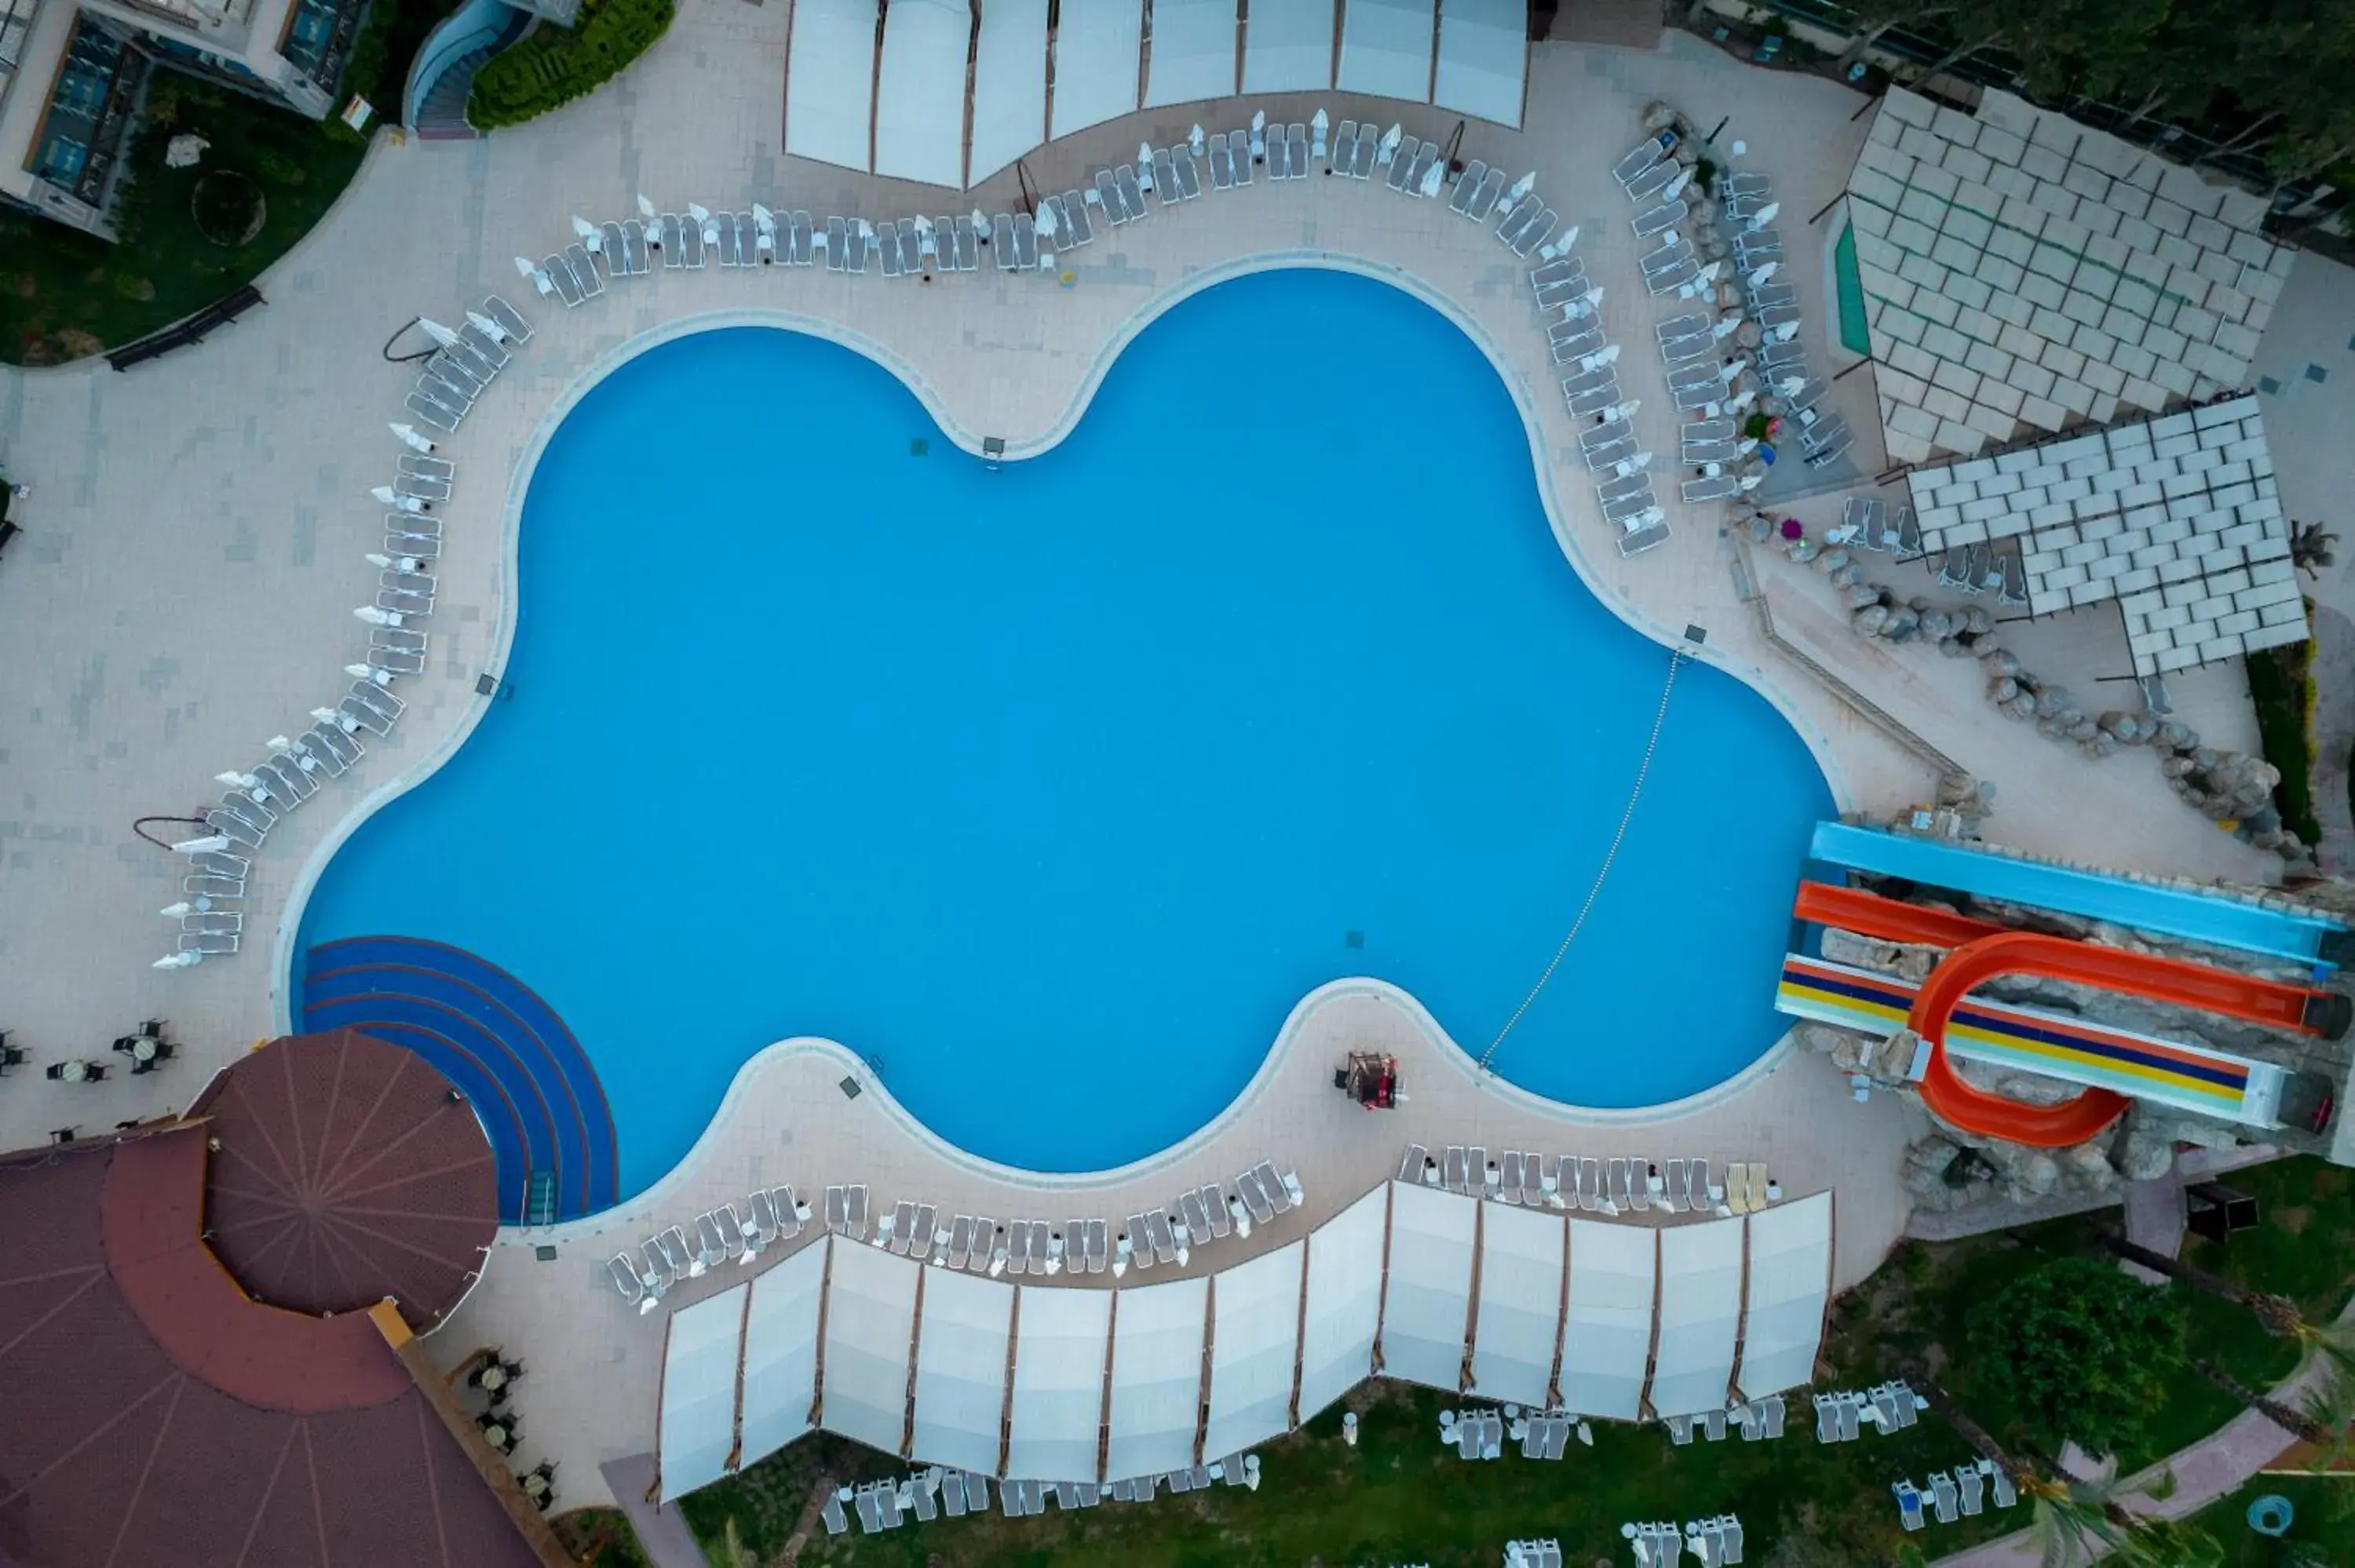 Pool View in Club Hotel Felicia Village